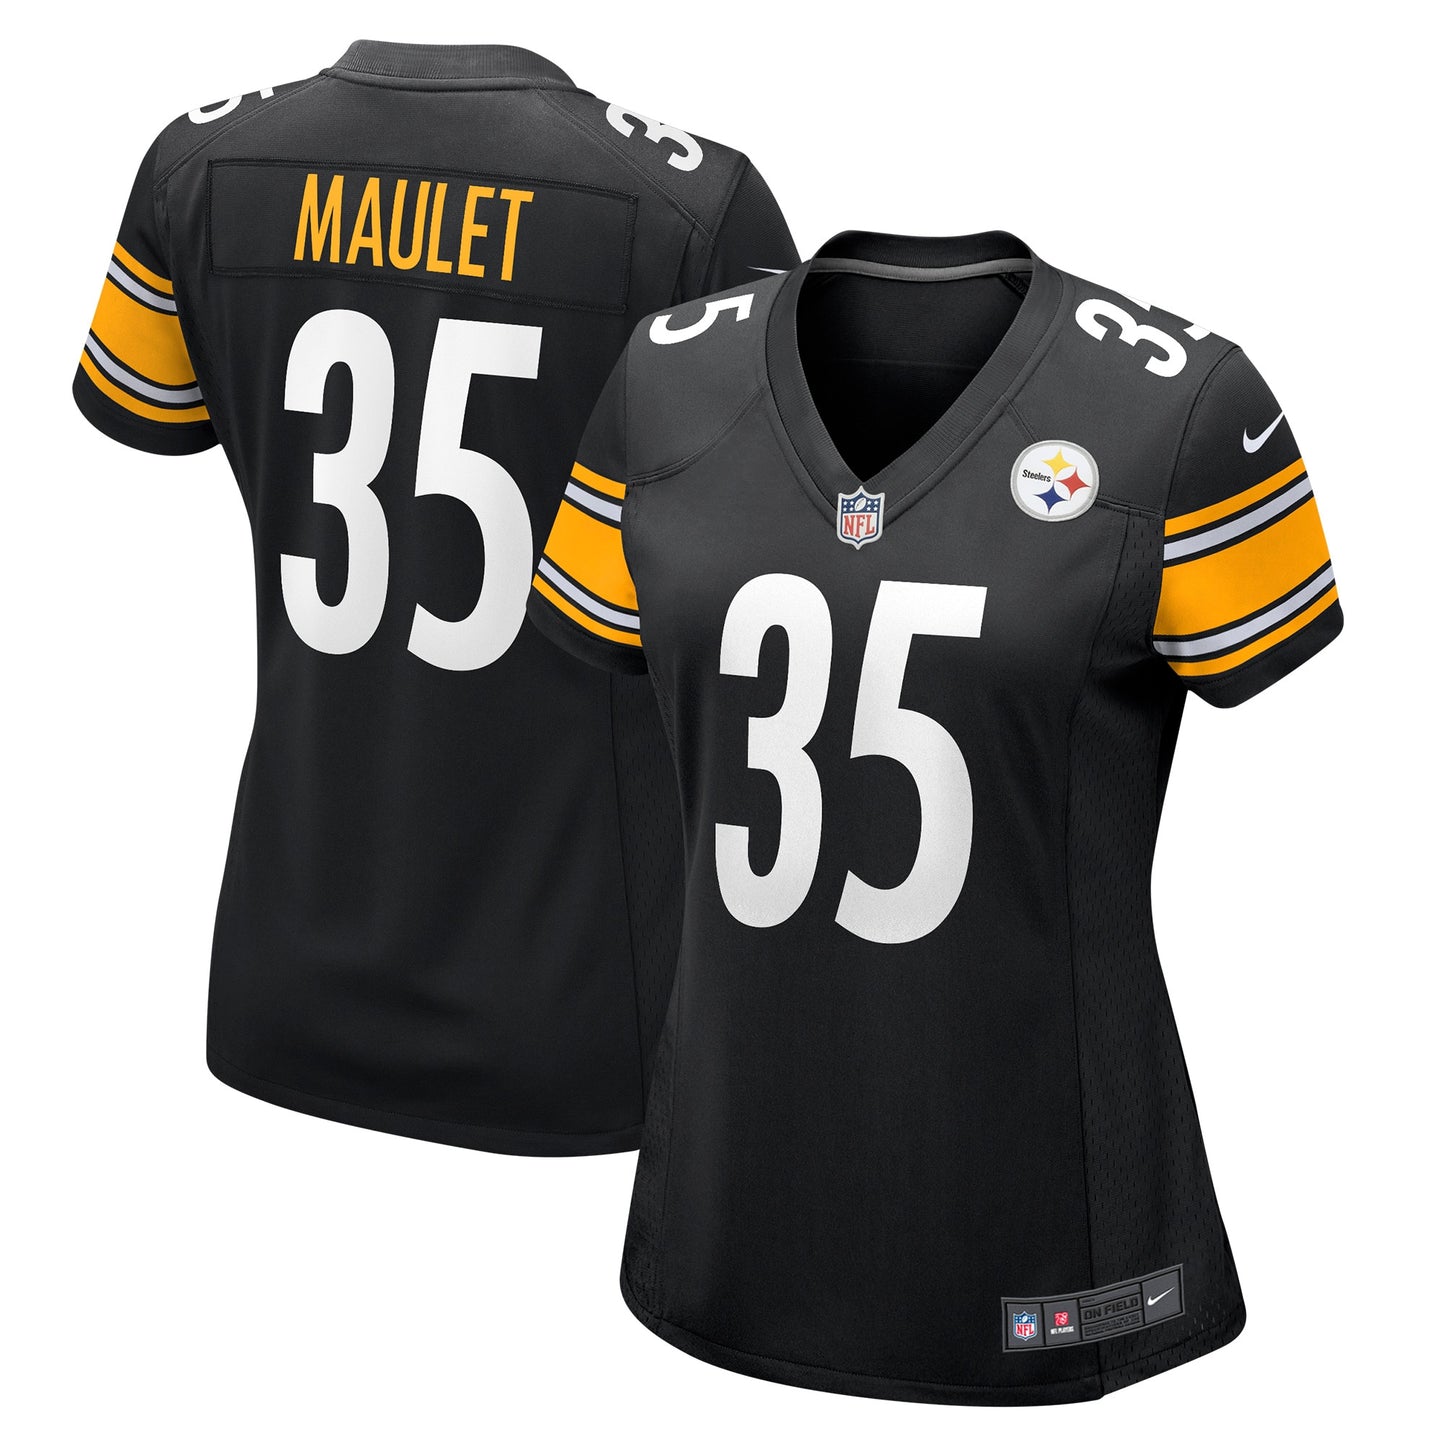 Arthur Maulet Pittsburgh Steelers Nike Women's Game Jersey - Black